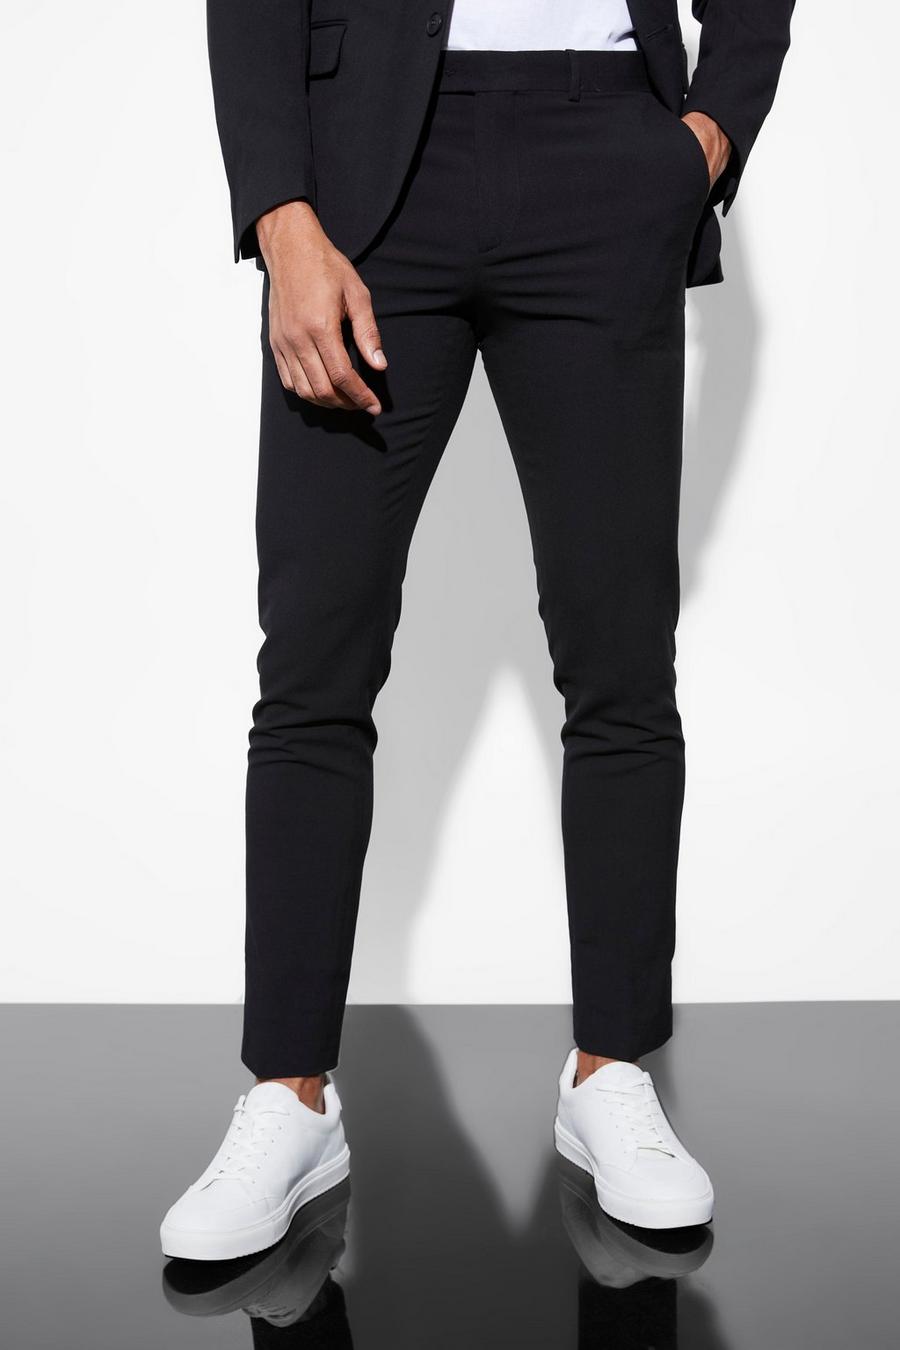 Men's New Slim Fit Black Tuxedo Pants (28 Short) at  Men's